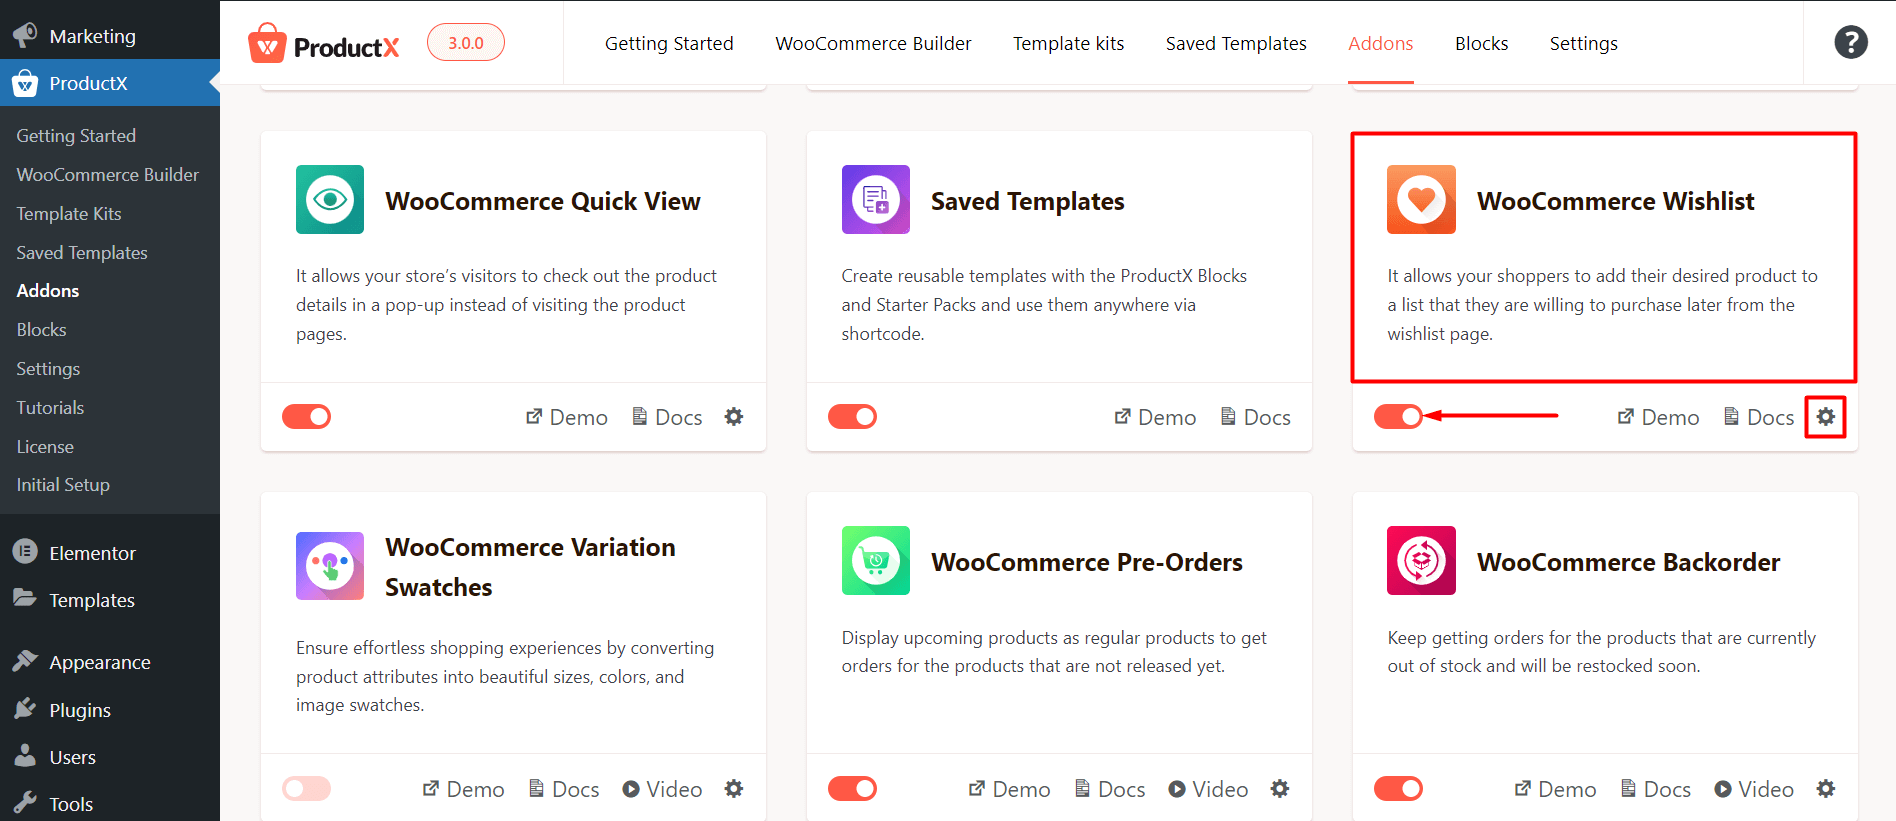 Enabling WooCommerce Wishlist Plugin